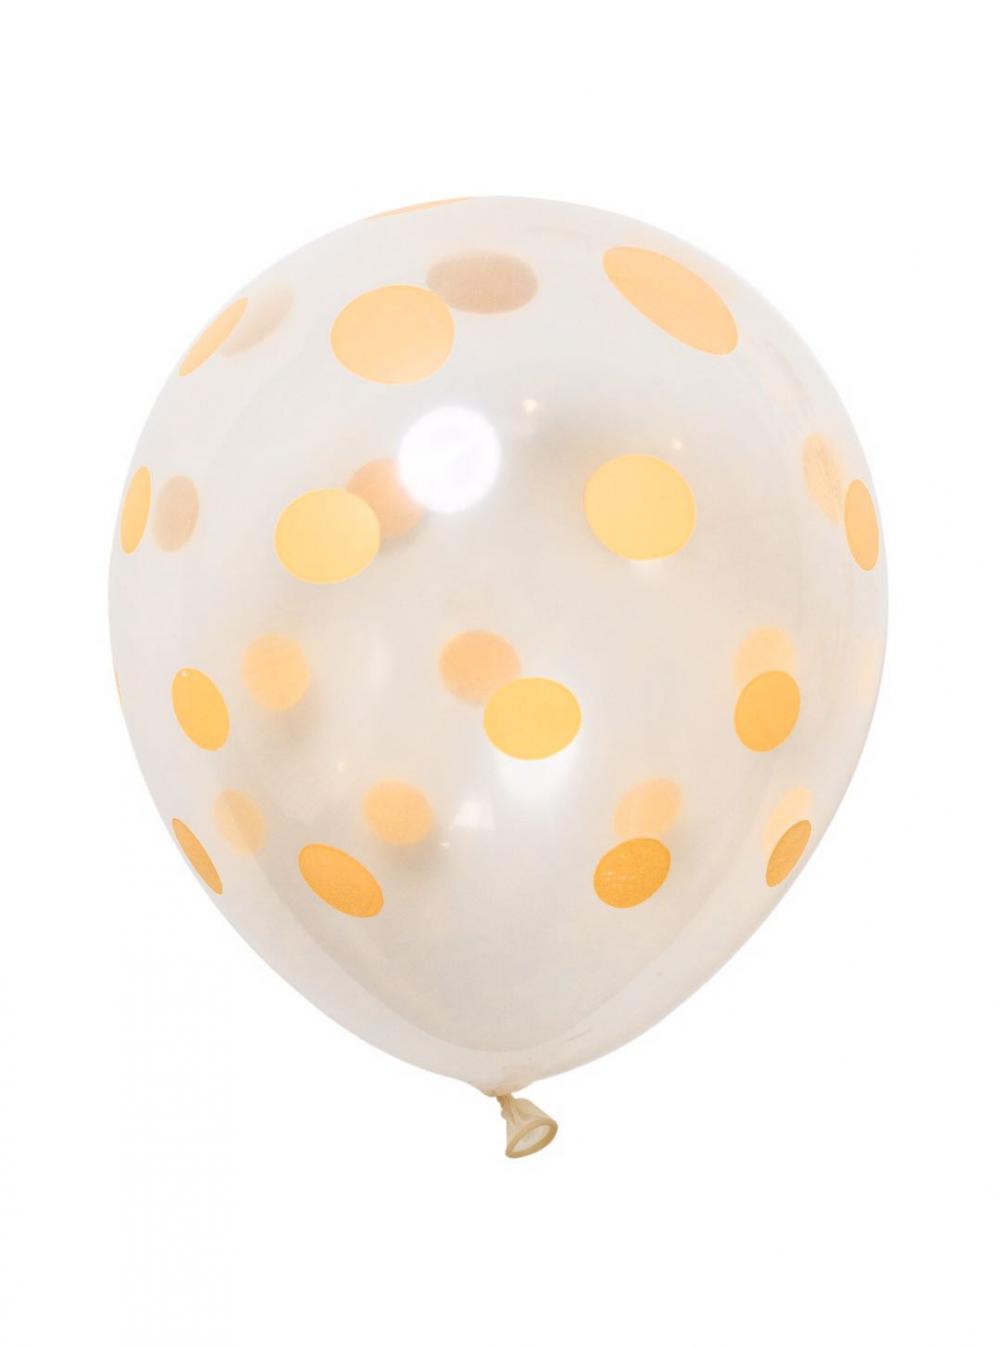 12 Inch Standard Polka Dot Balloons Clear Balloon Yellow Dot (100PCS)